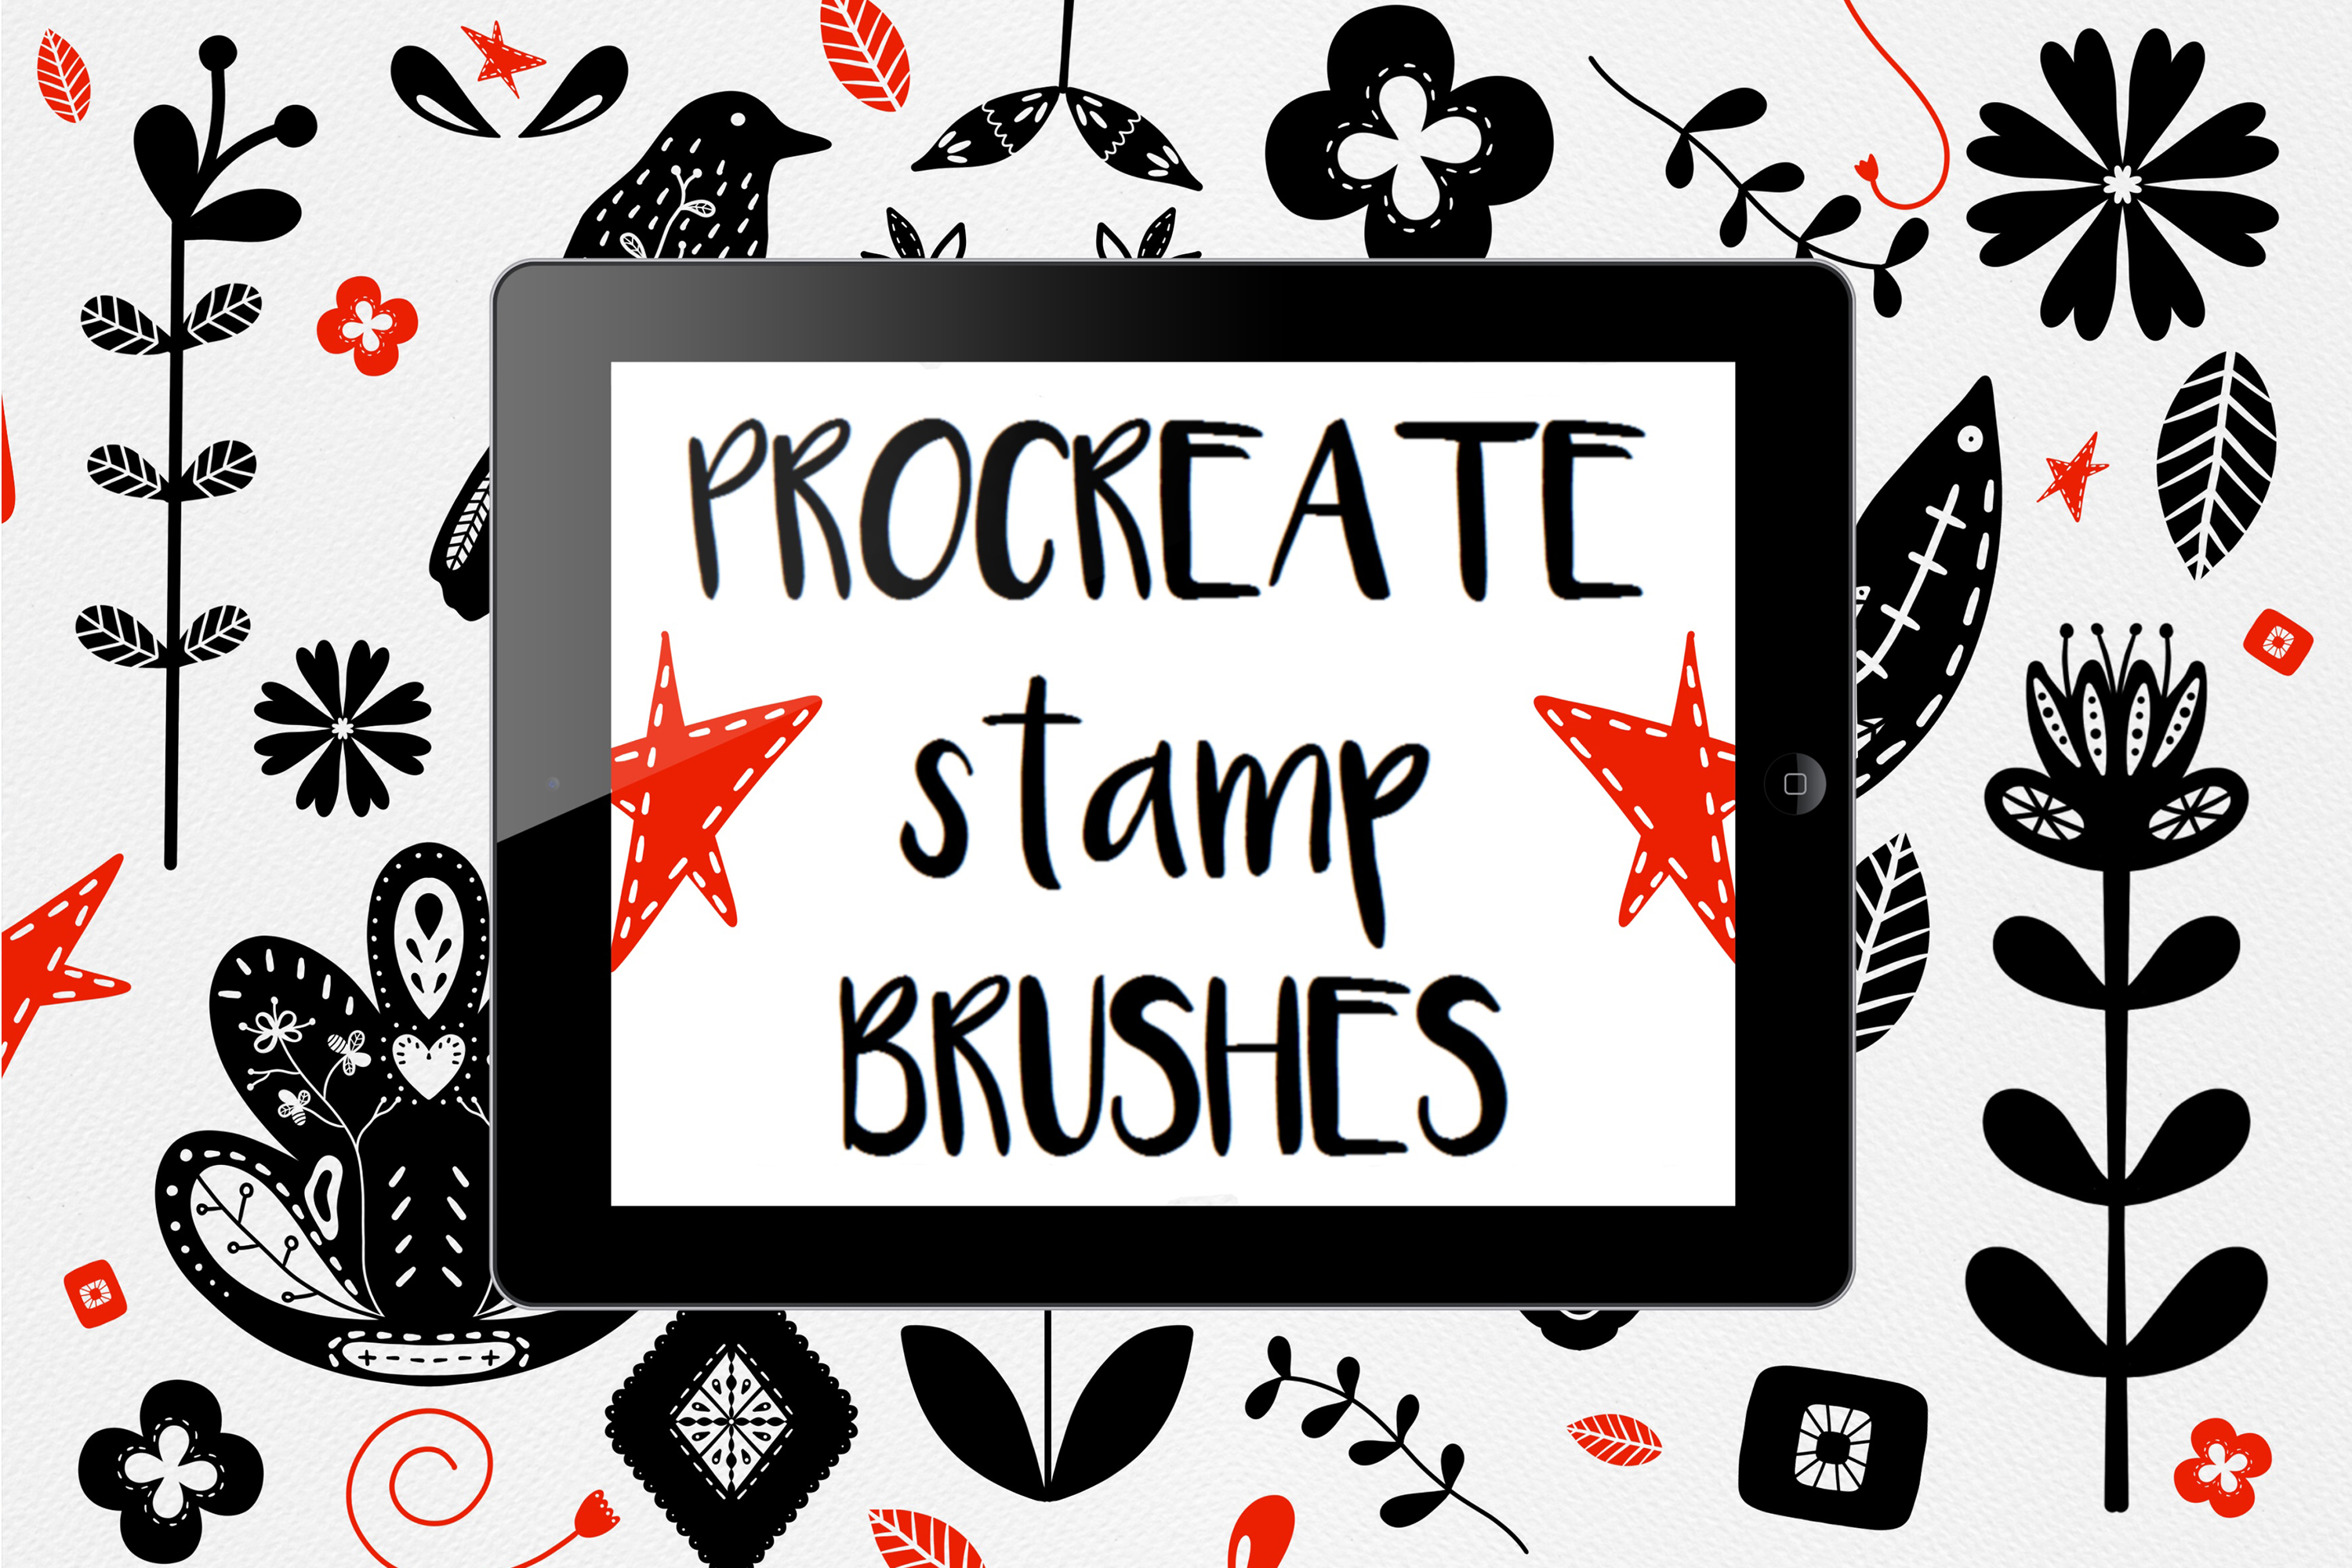 procreate brushes free stamp